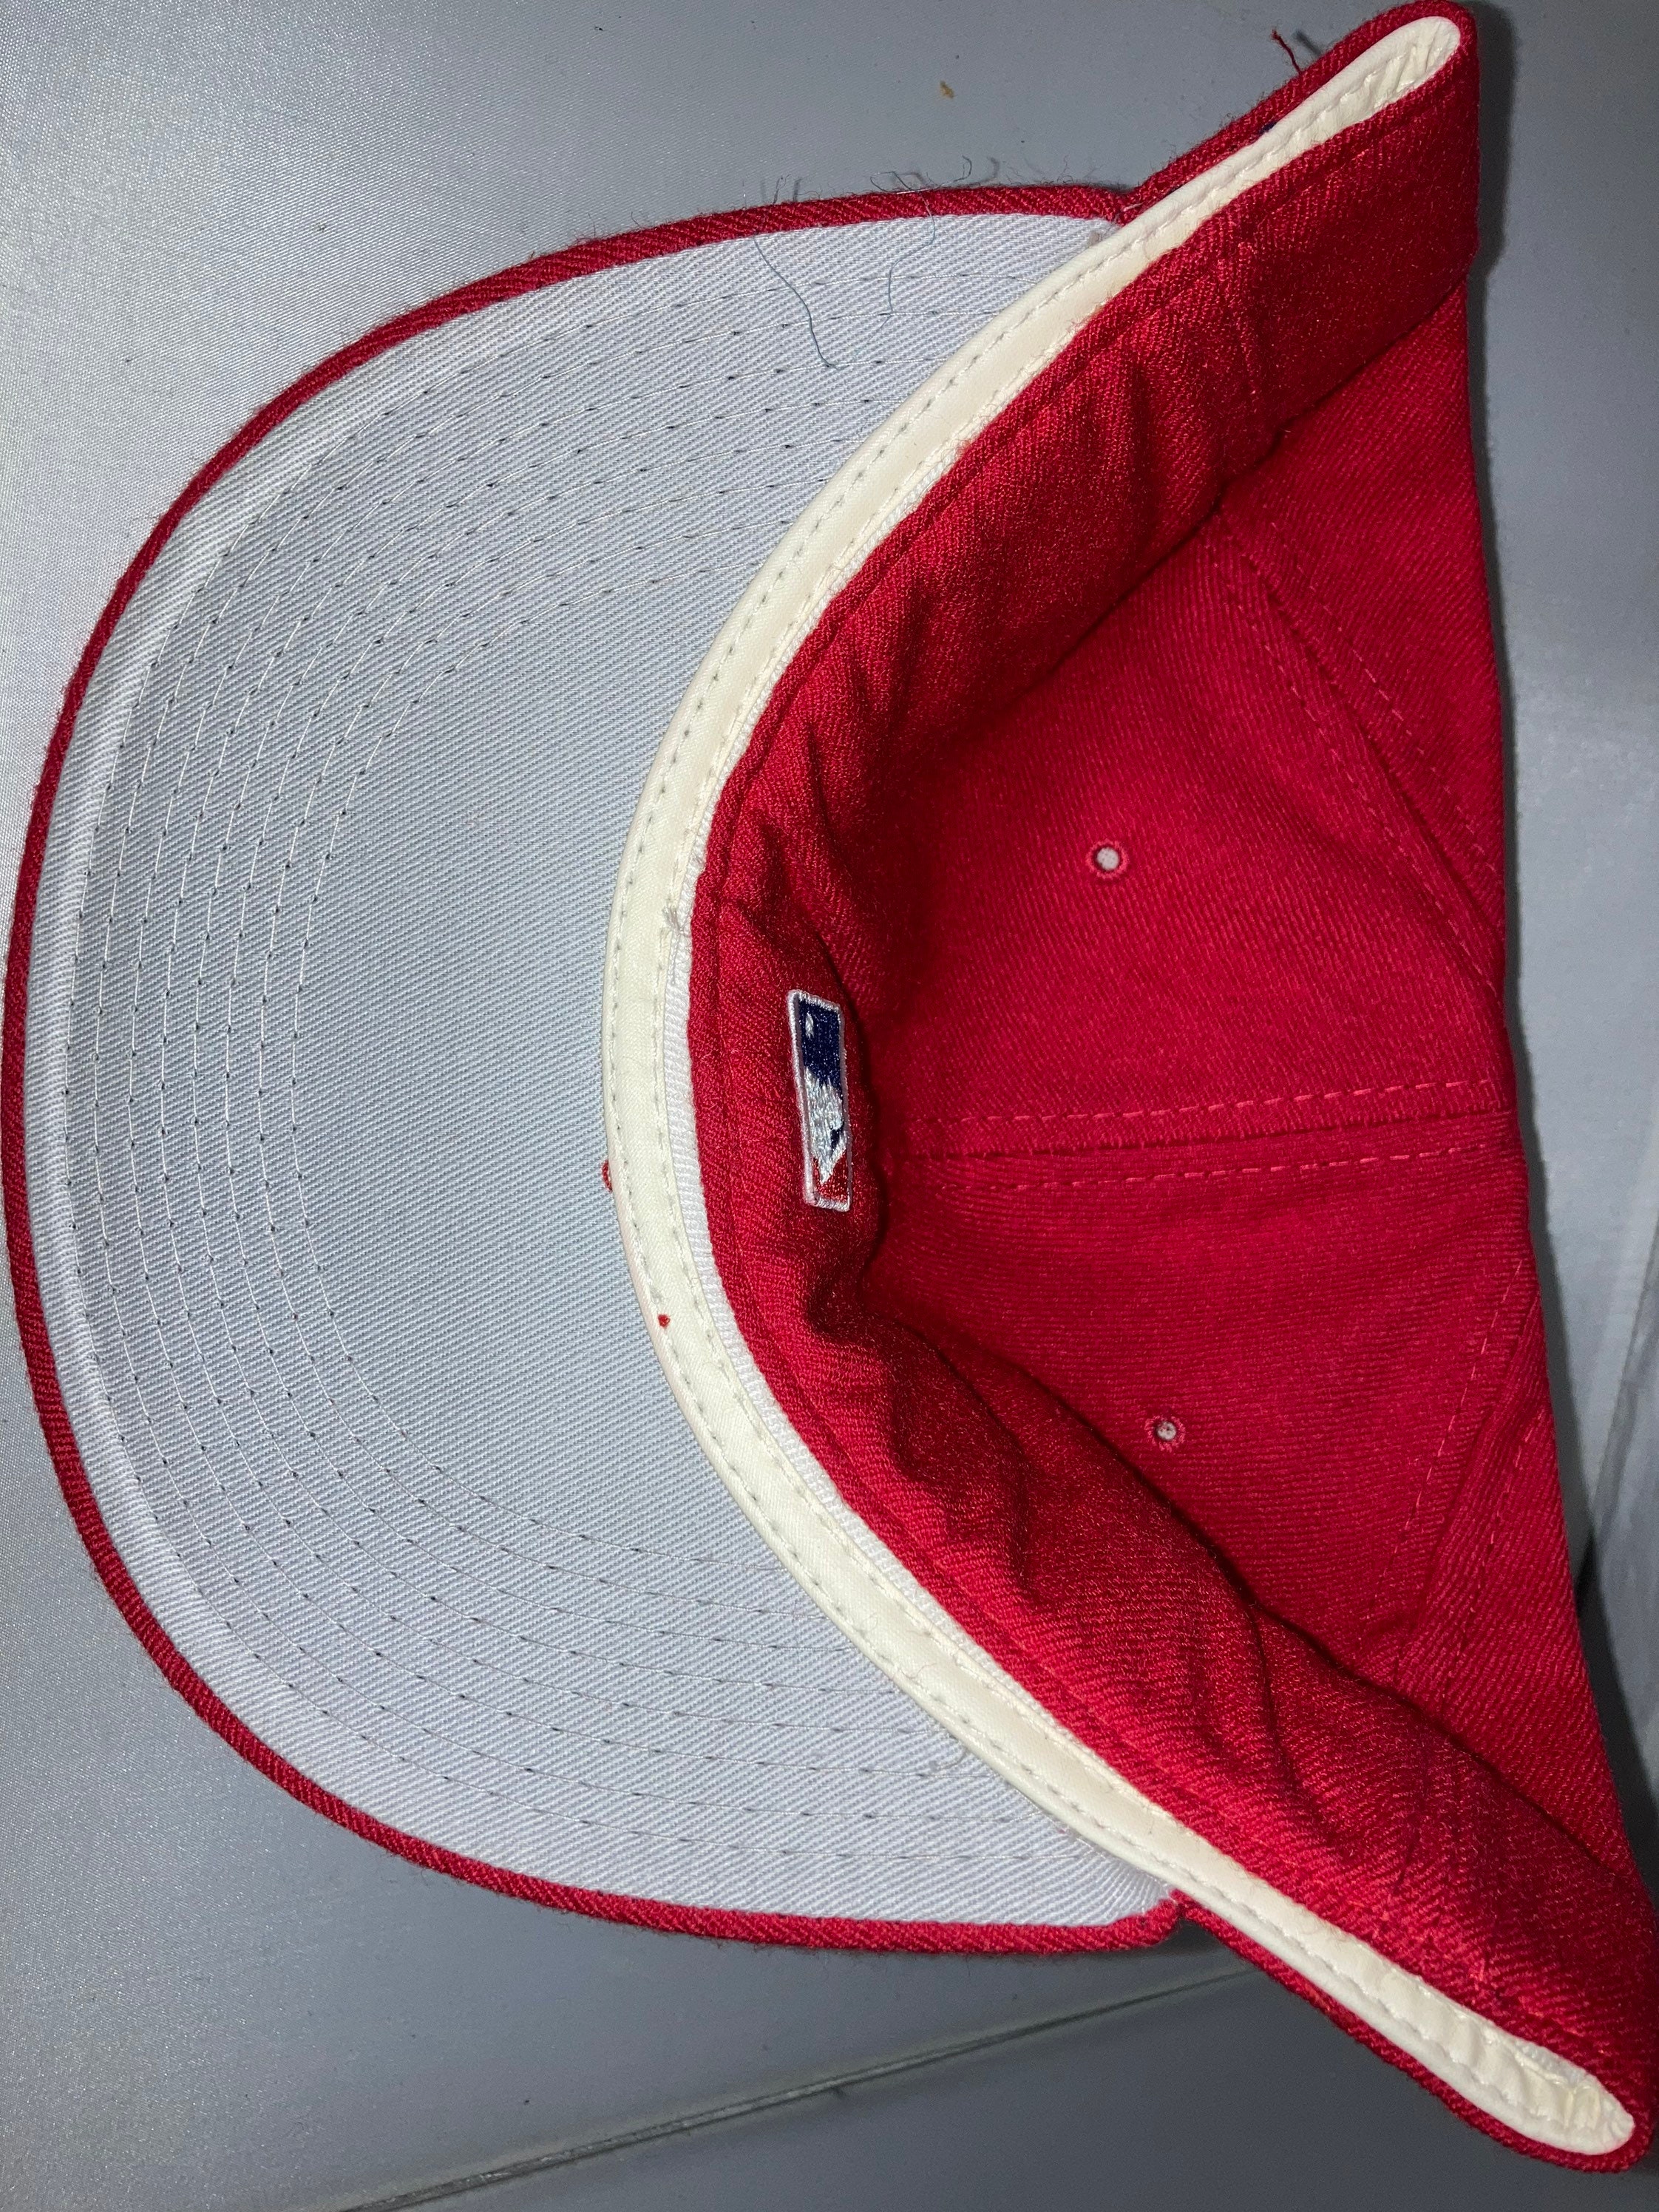 Vintage St Louis Cardinals New Era The 5950 Pro Model MLB Baseball Hat - 7  1/4